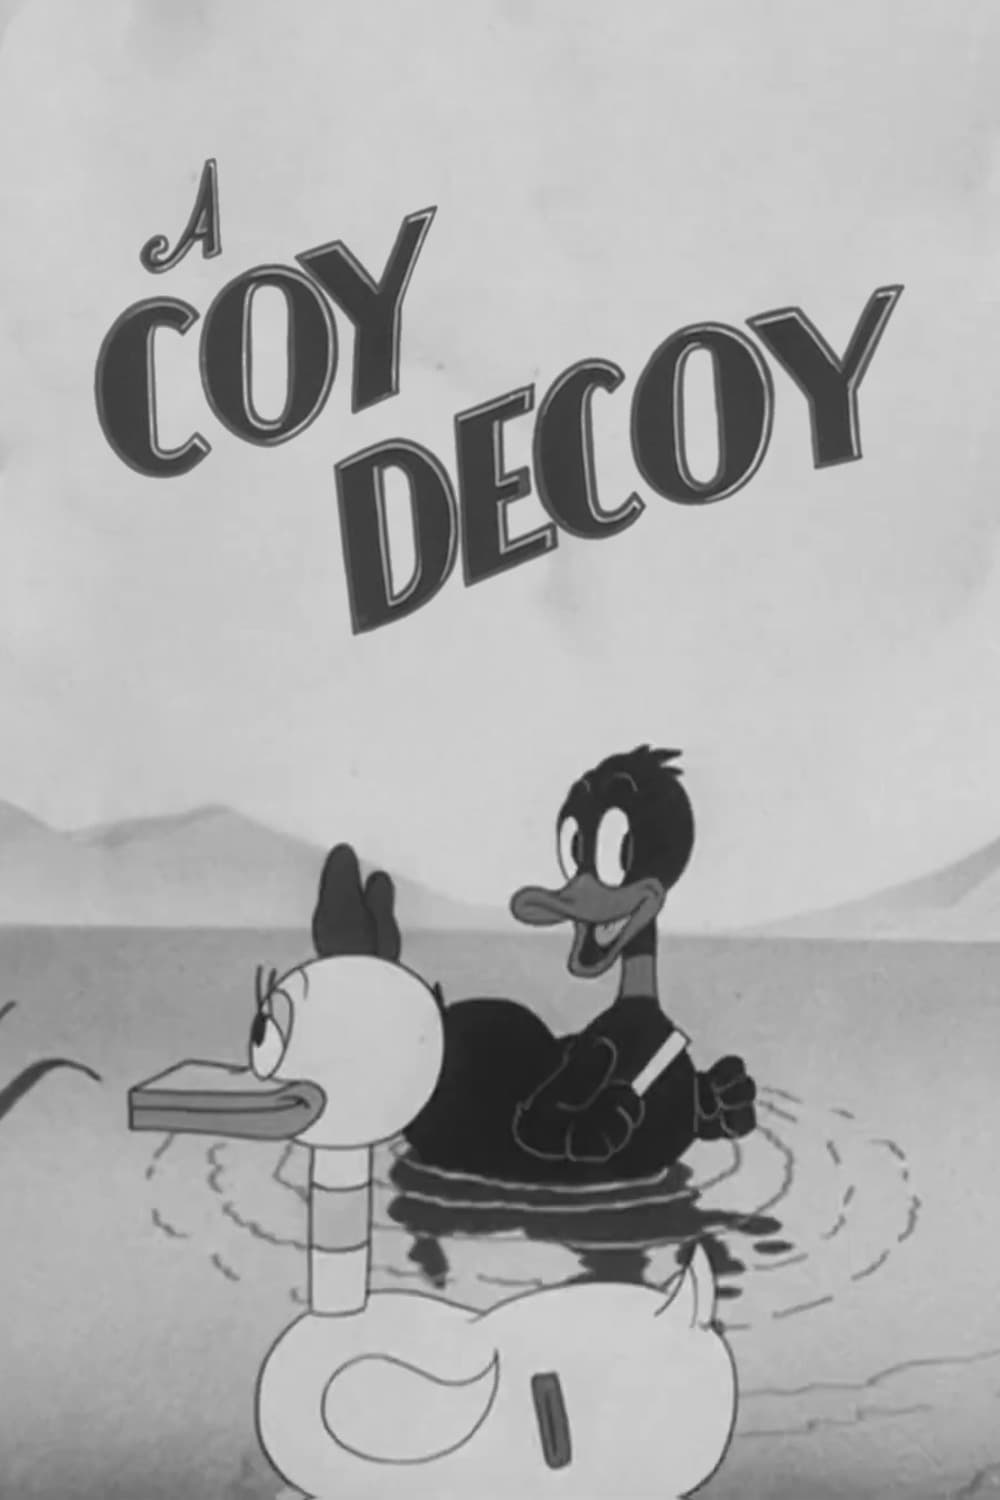 A Coy Decoy (1941) постер